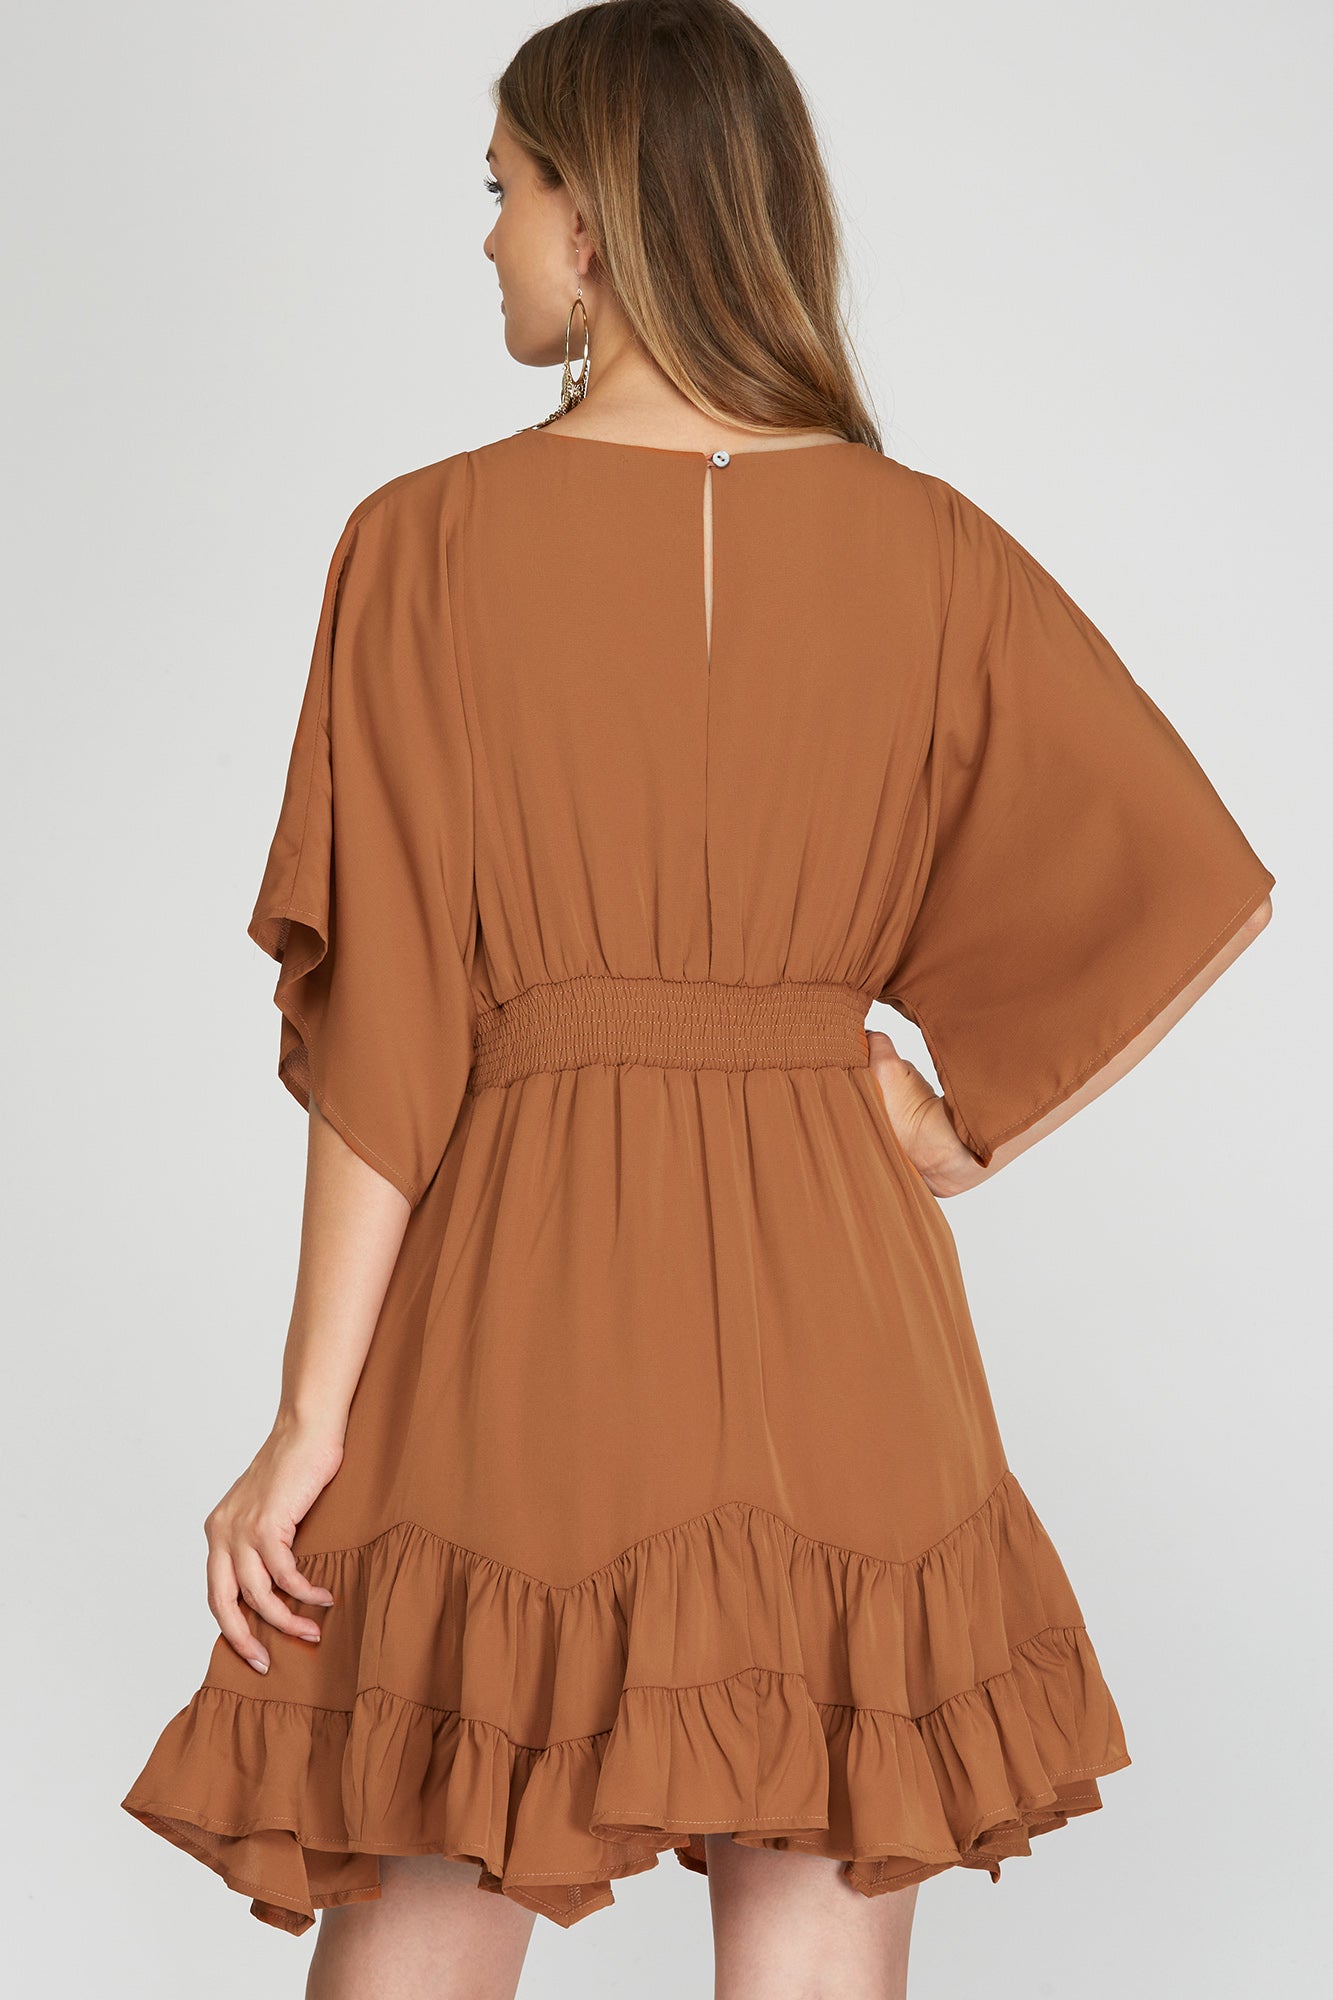 Megan - Camel Low Cut Tiered Dress